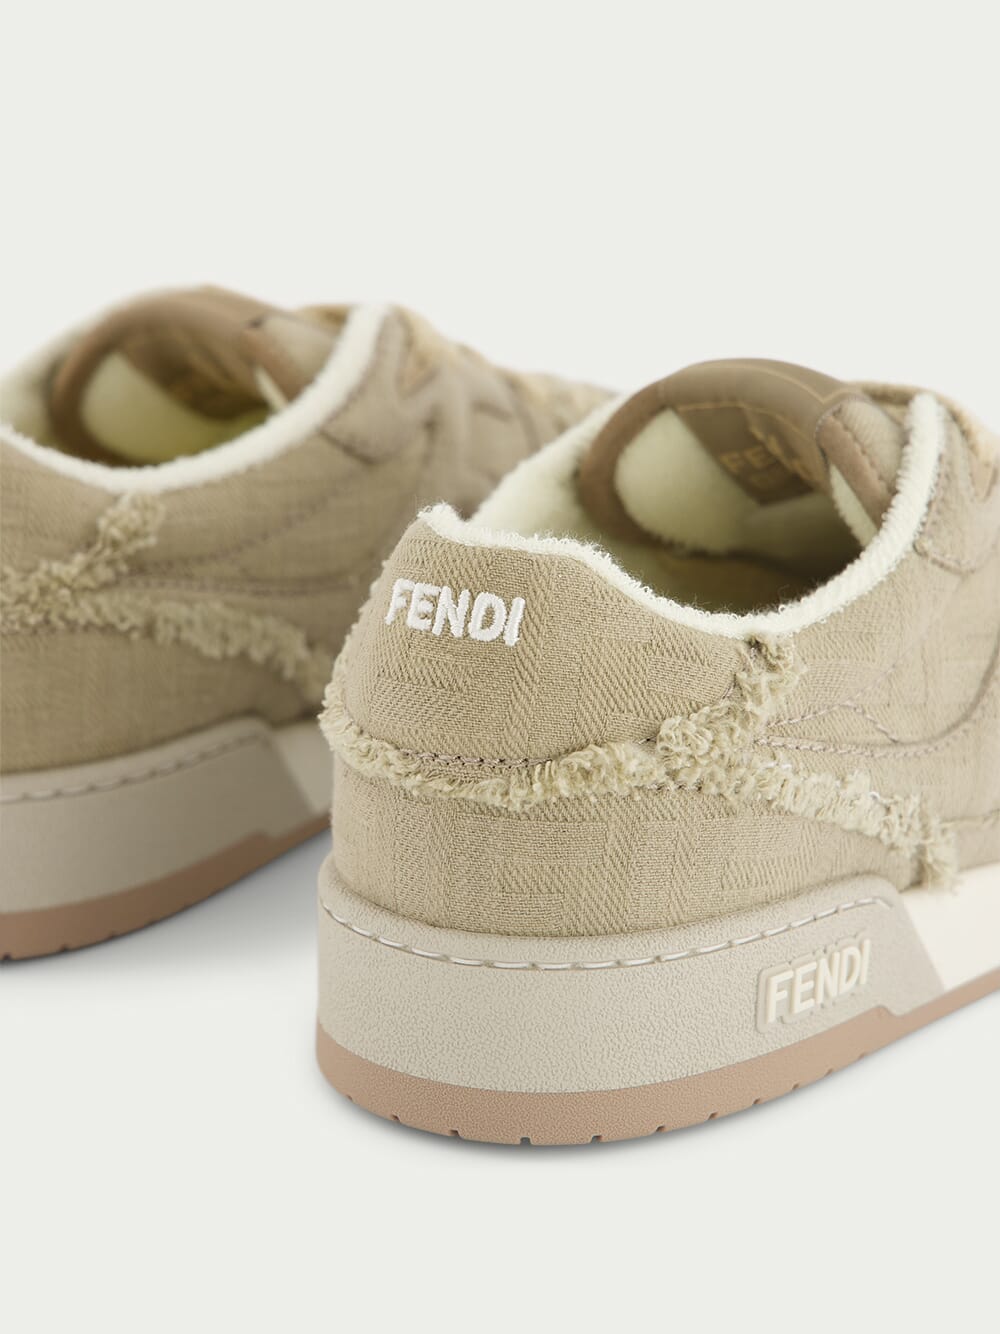 Fendi Grey Calf Leather Low Top Sneakers